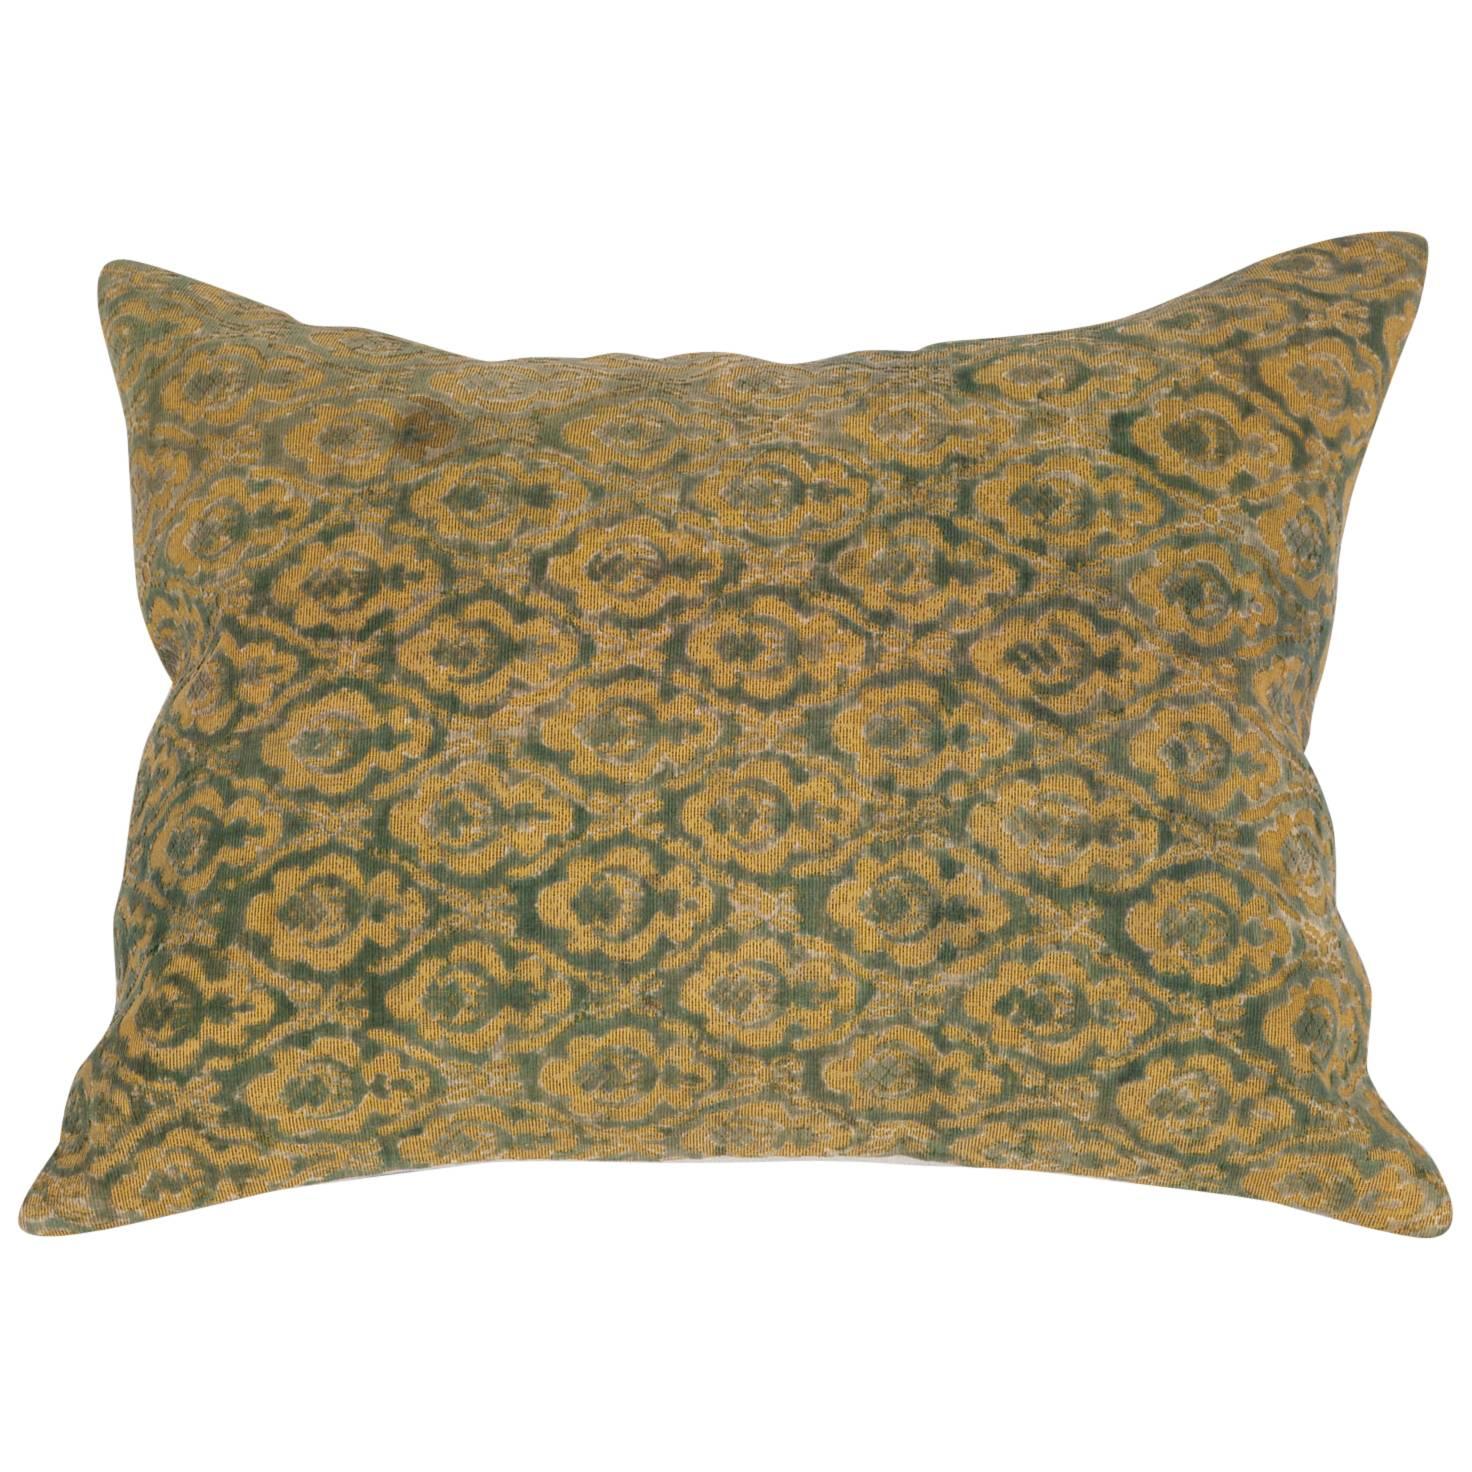 Early 20th Century Central Asian Cut Velvet pillow